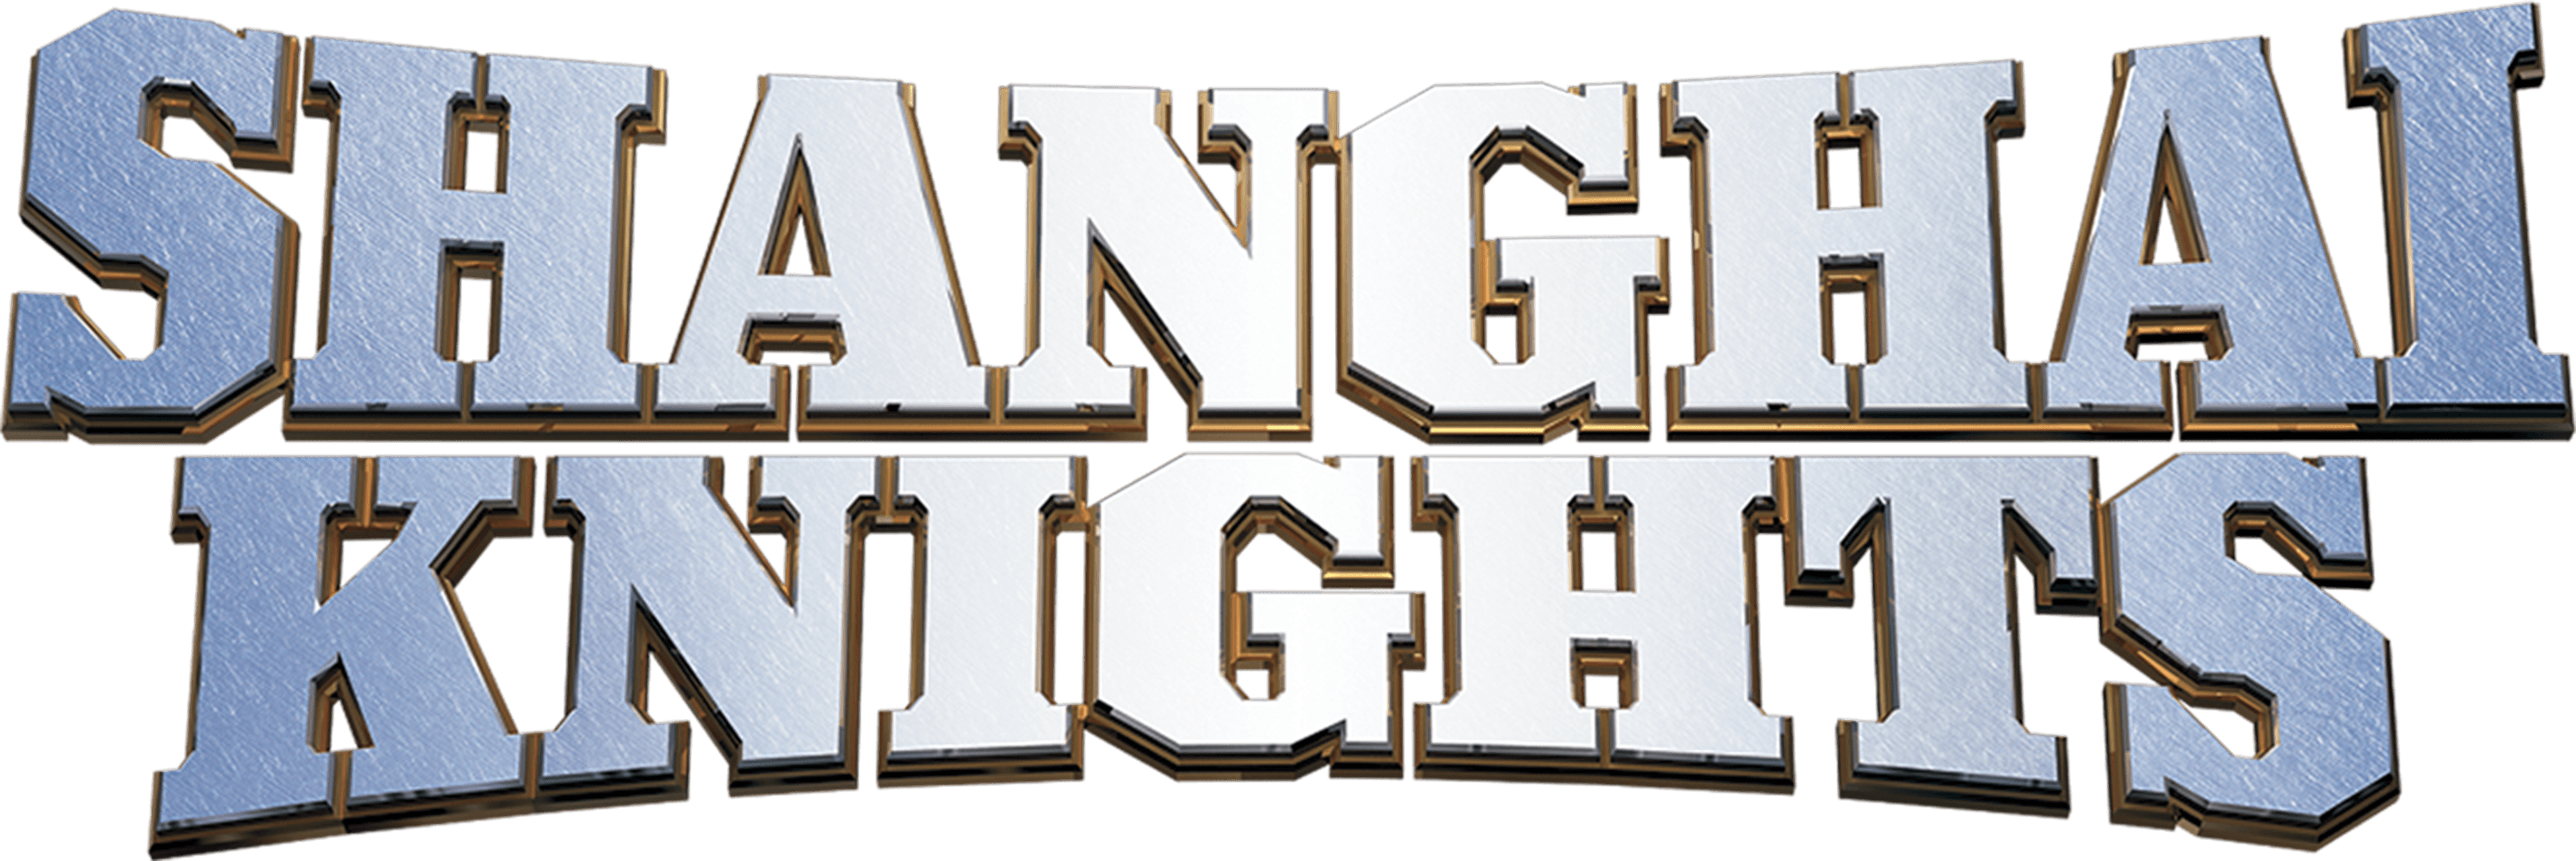 Shanghai Knights logo